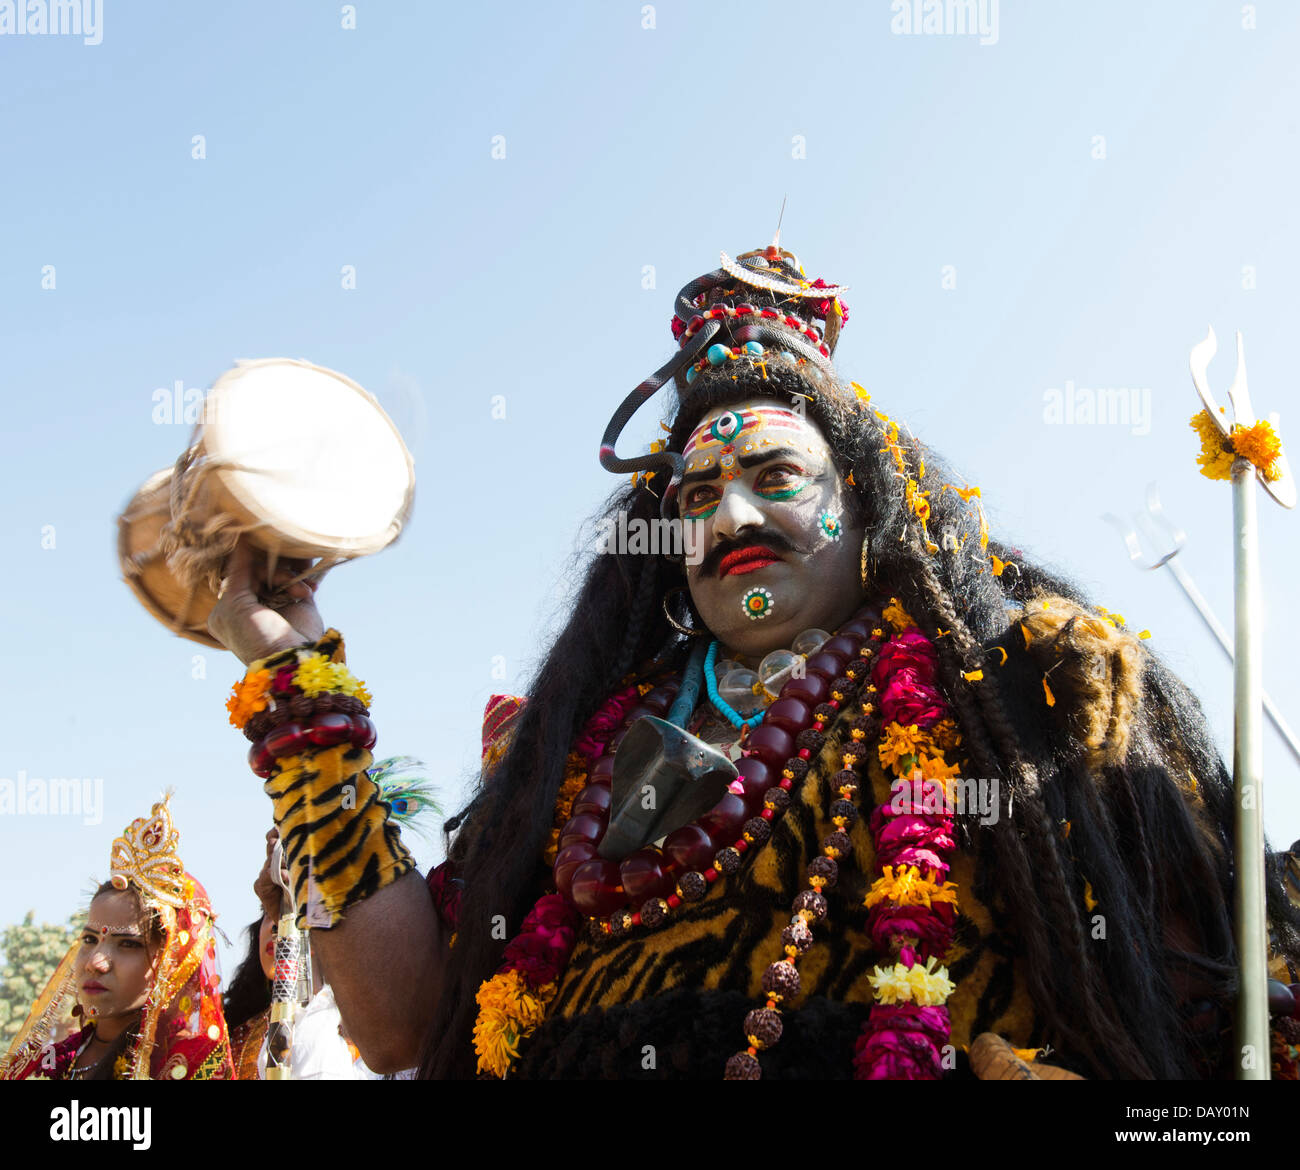 Des artistes dans une procession traditionnelle, Pushkar Camel Fair, Pushkar, Ajmer, Rajasthan, Inde Banque D'Images